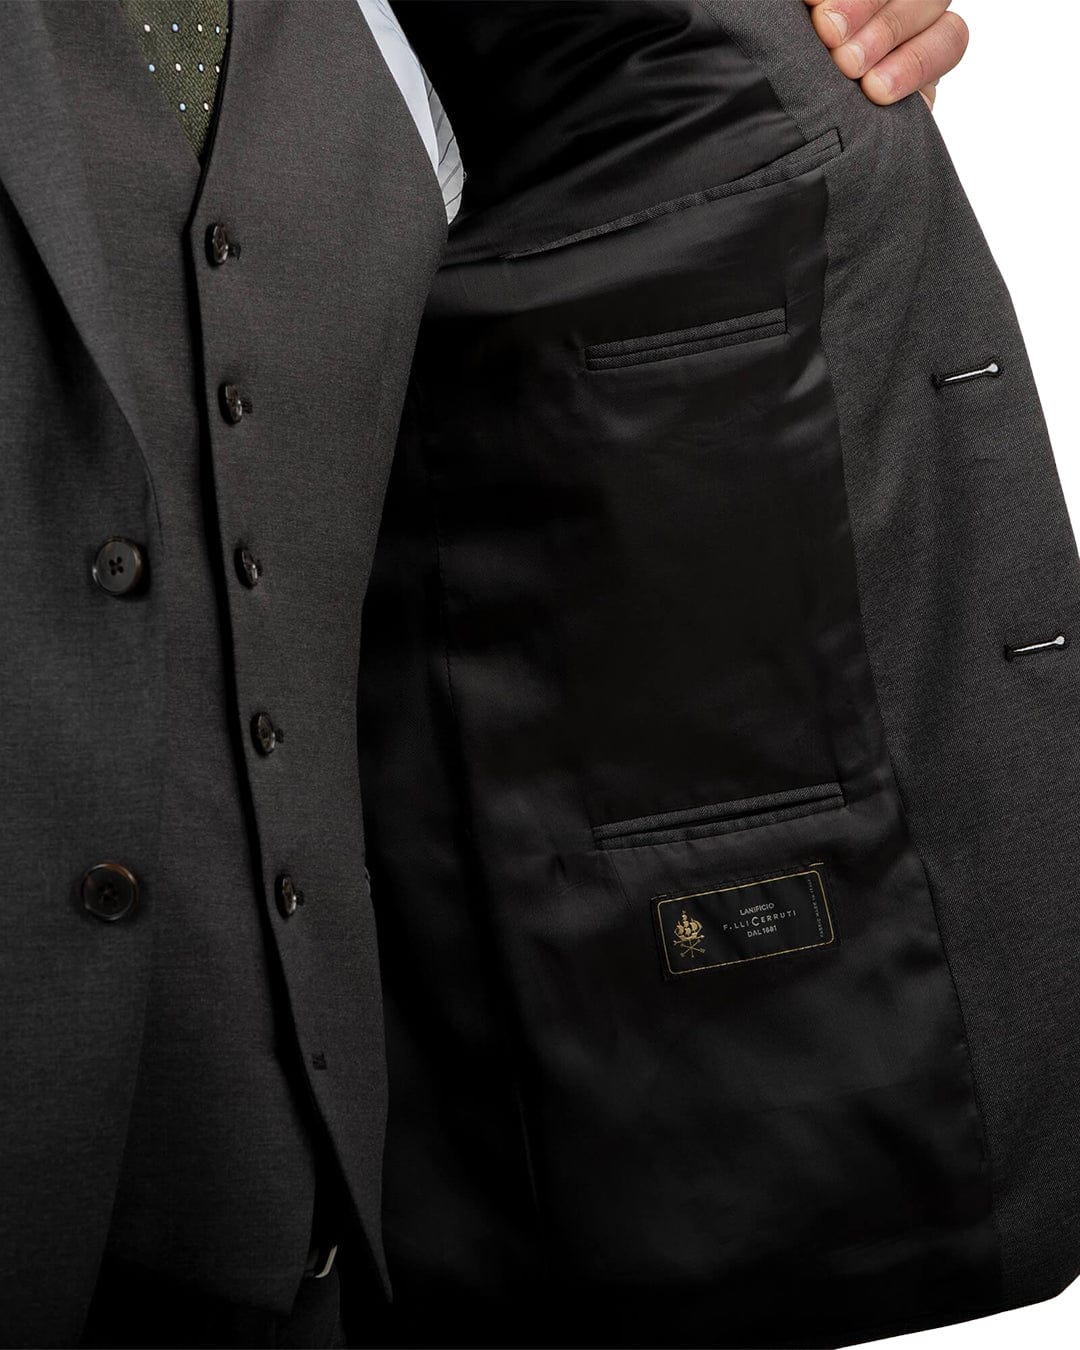 Lanificio F.lli Cerruti Charcoal Suit Jacket